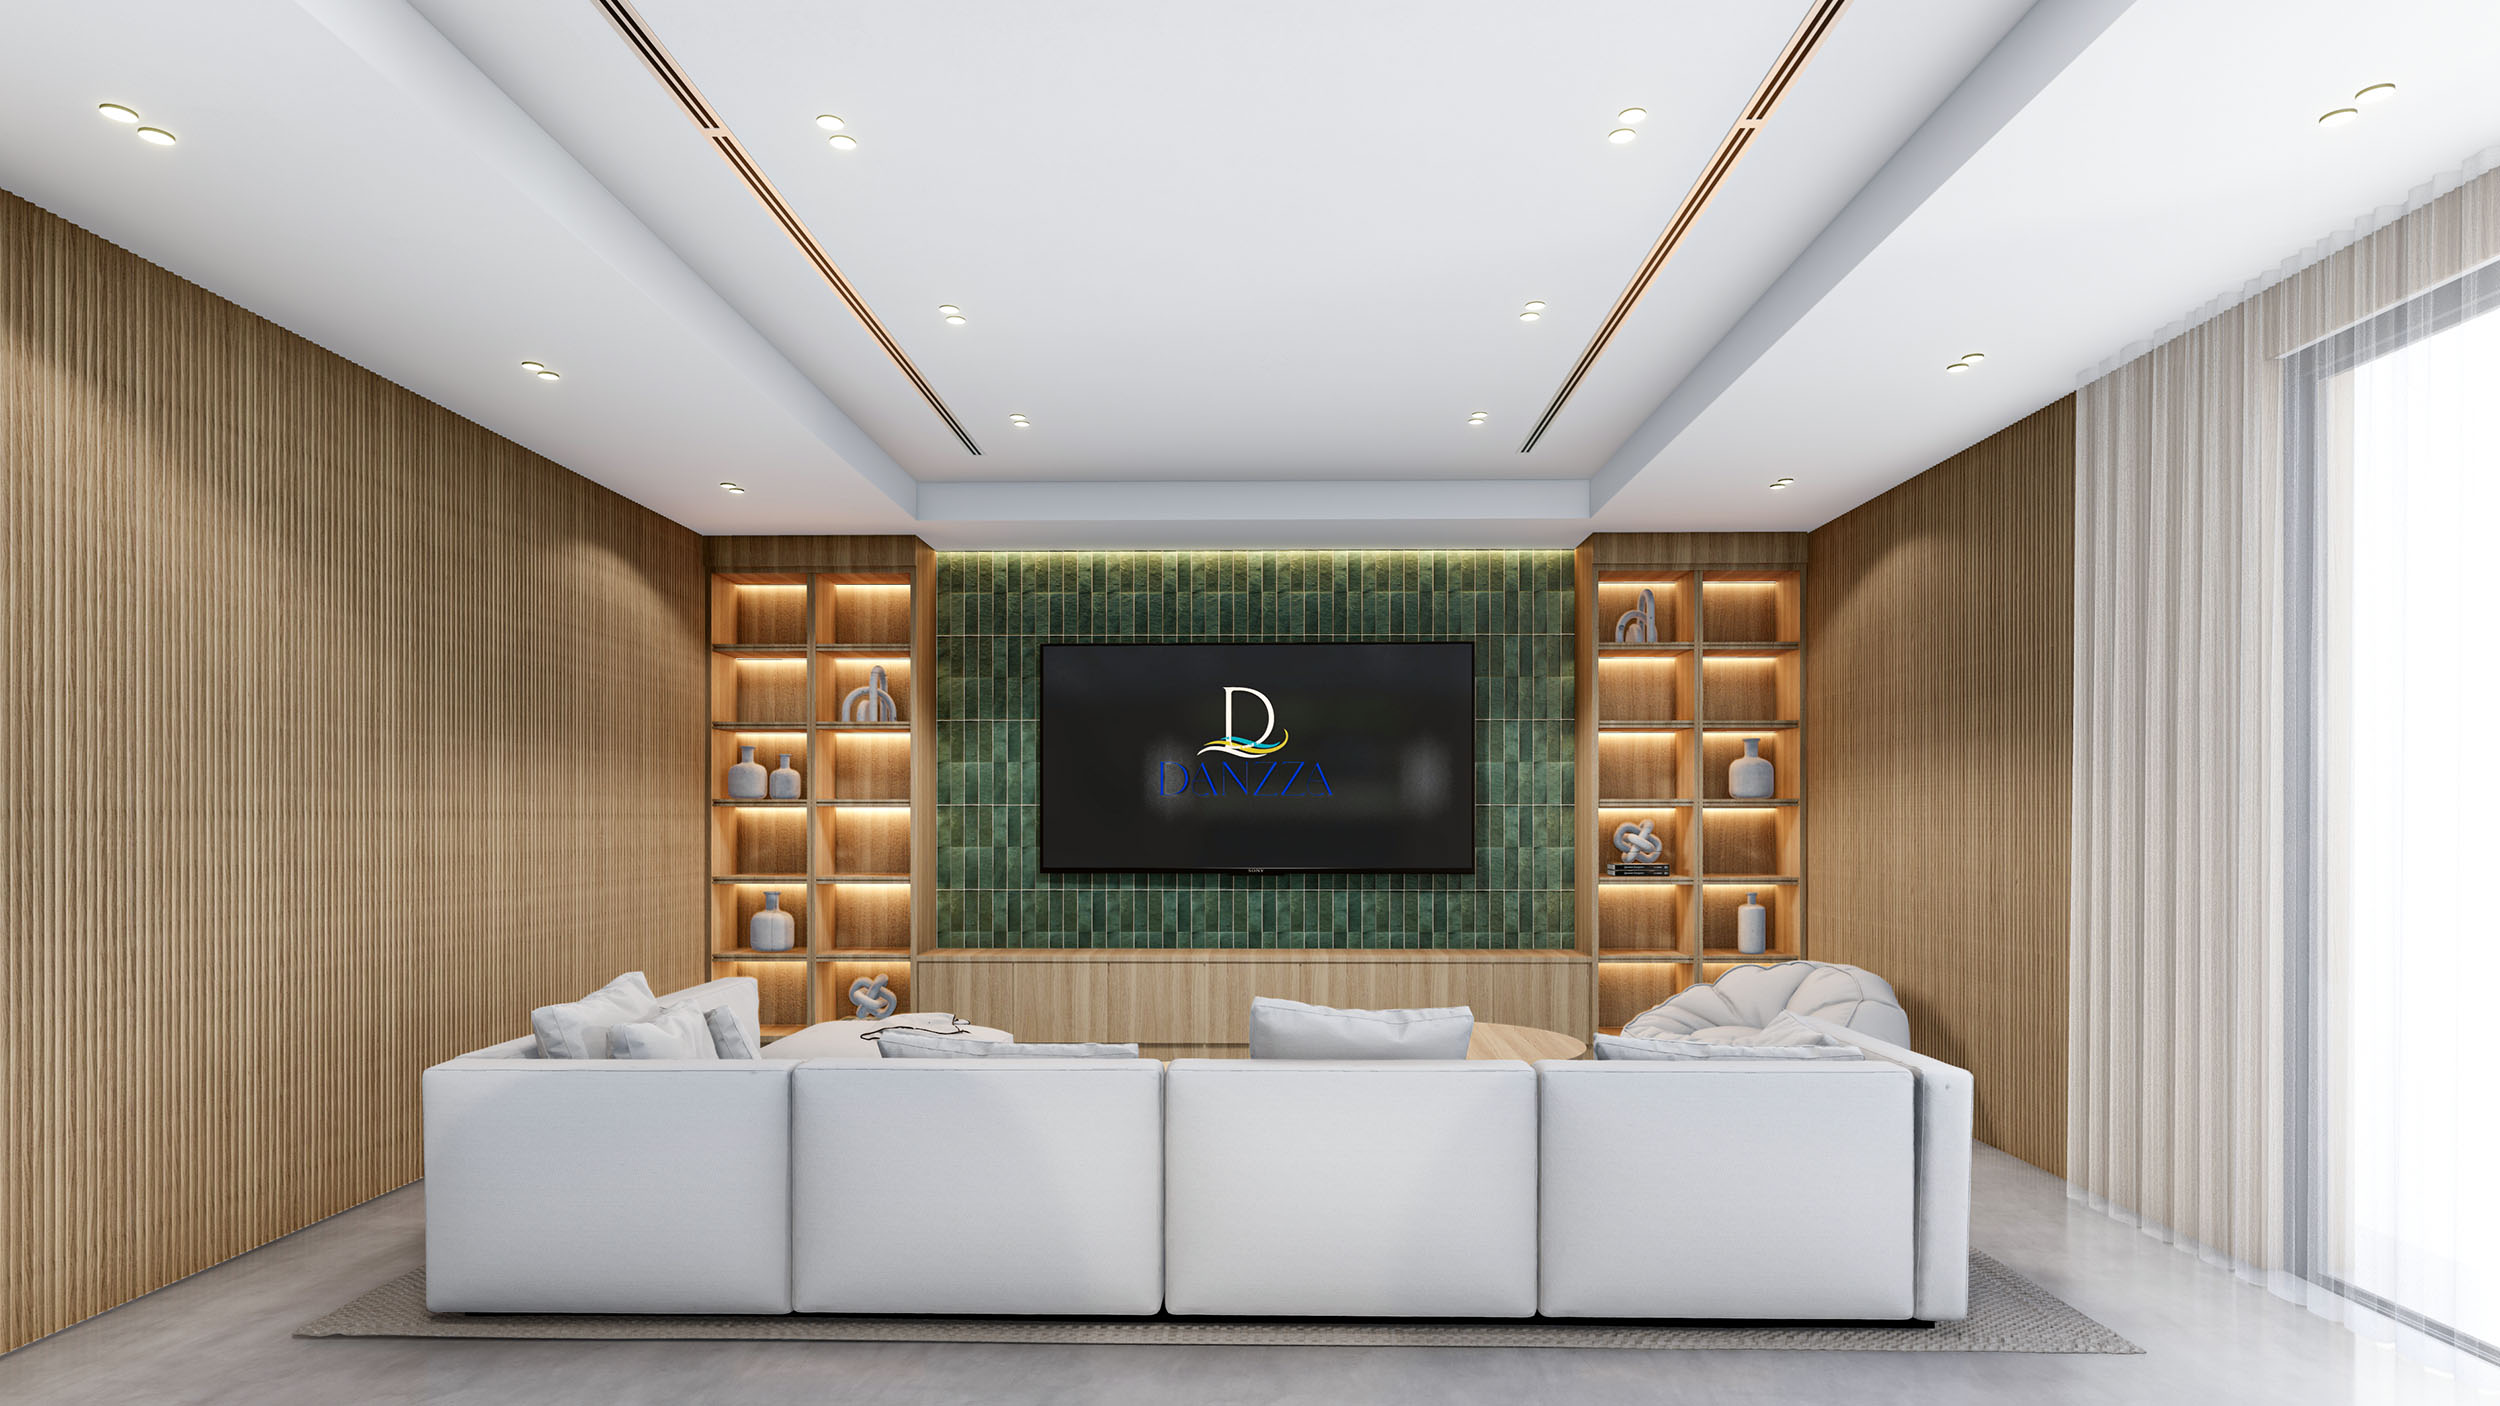 Danzza Luxury Residence, cap cana